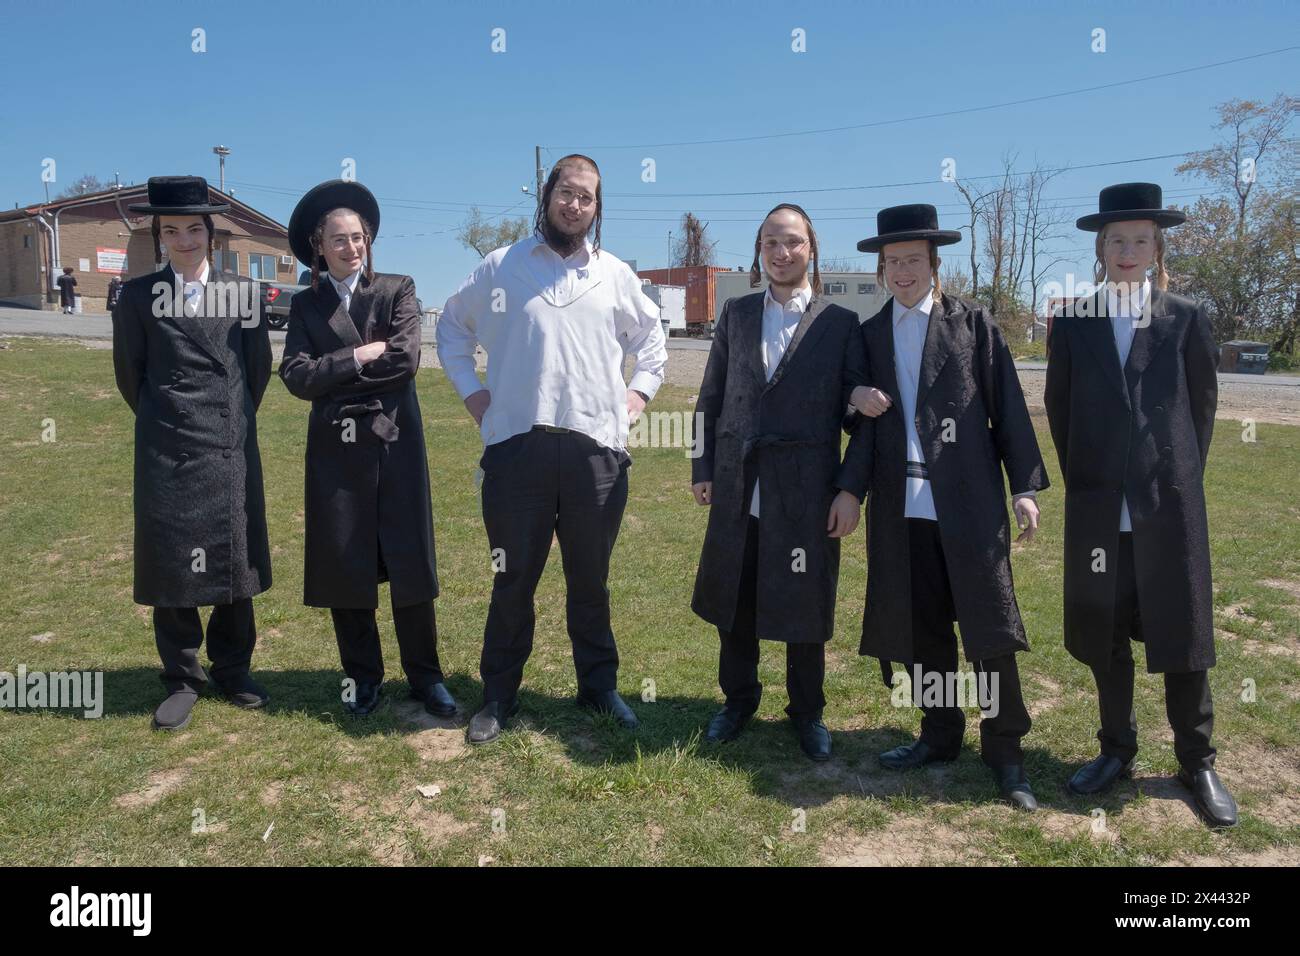 A posed photo of 7 orthodox Jewish boys from the Satmar Hasidic dynasty. Outdoors in Kiryas Joel, Rockland County, New York. Stock Photo